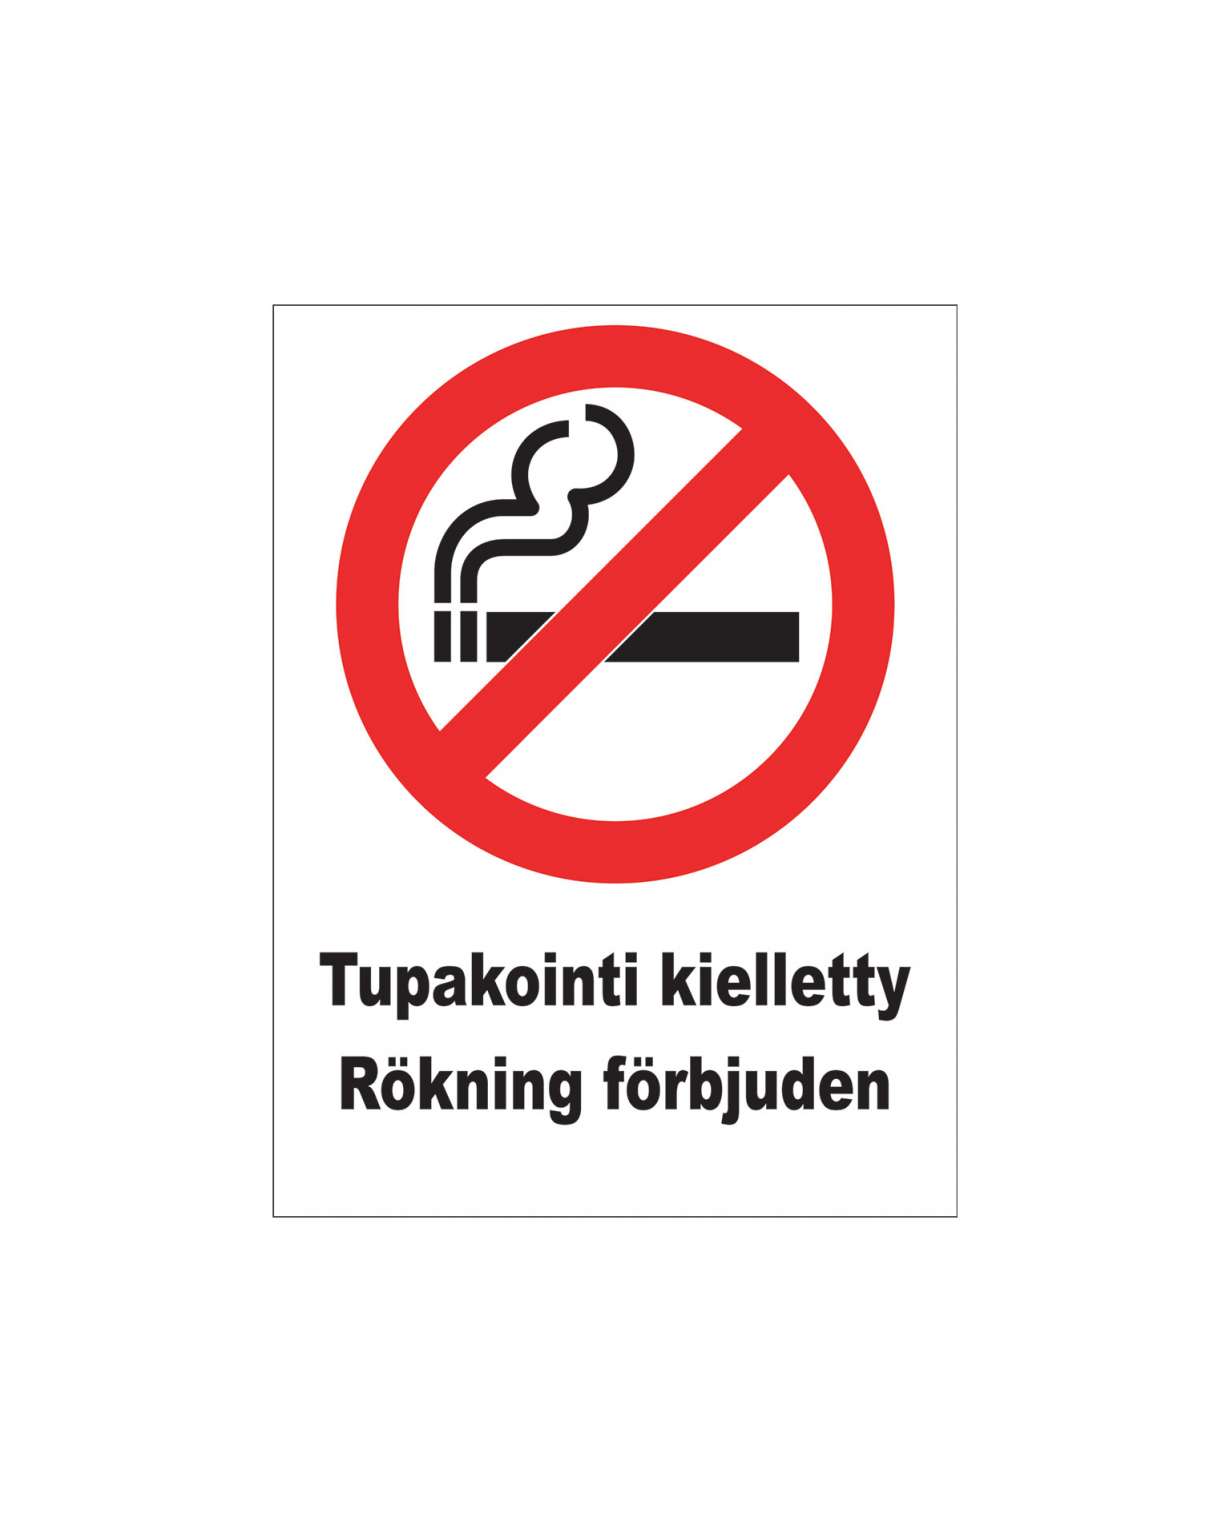 Tupakointi kielletty ruotsi, Ibond alumiini, 300x400 mm